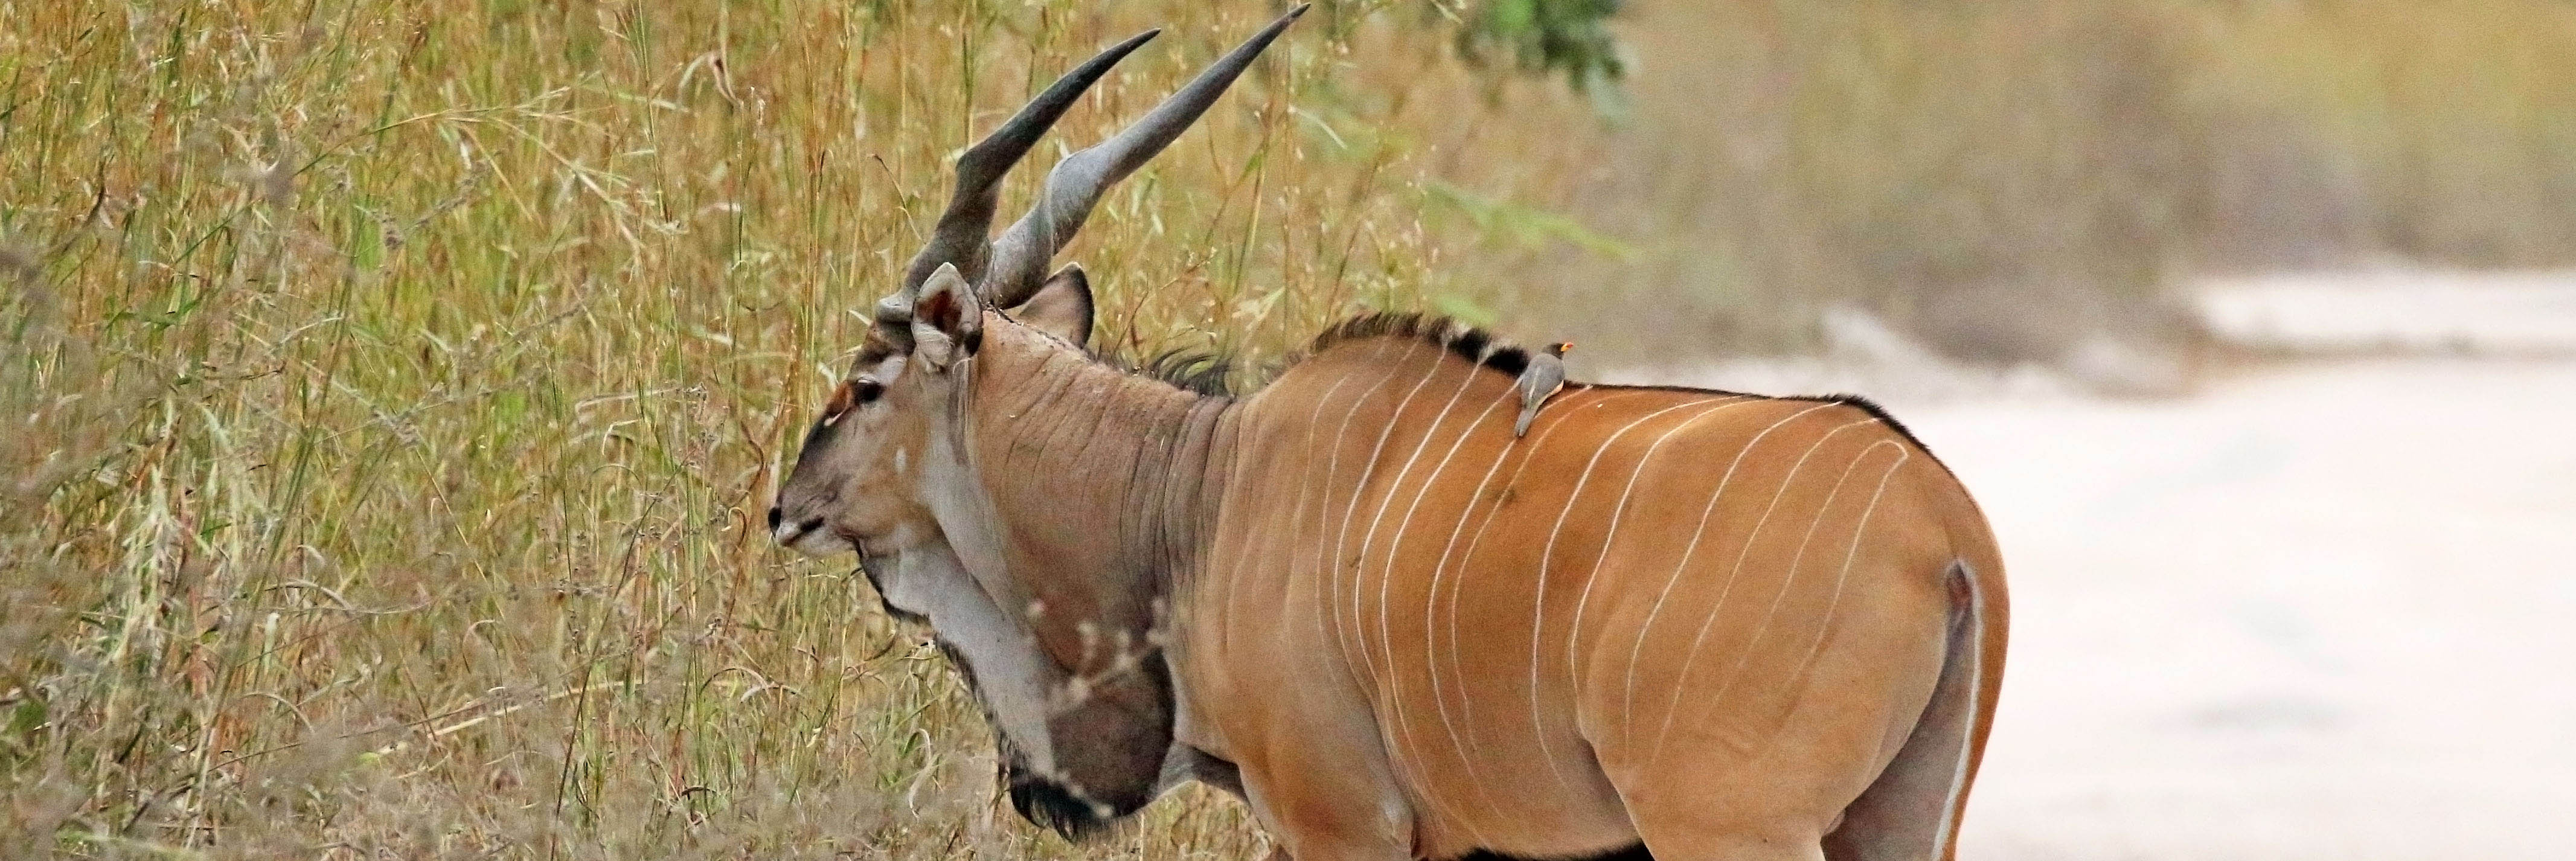 Giant eland | Wikimedia